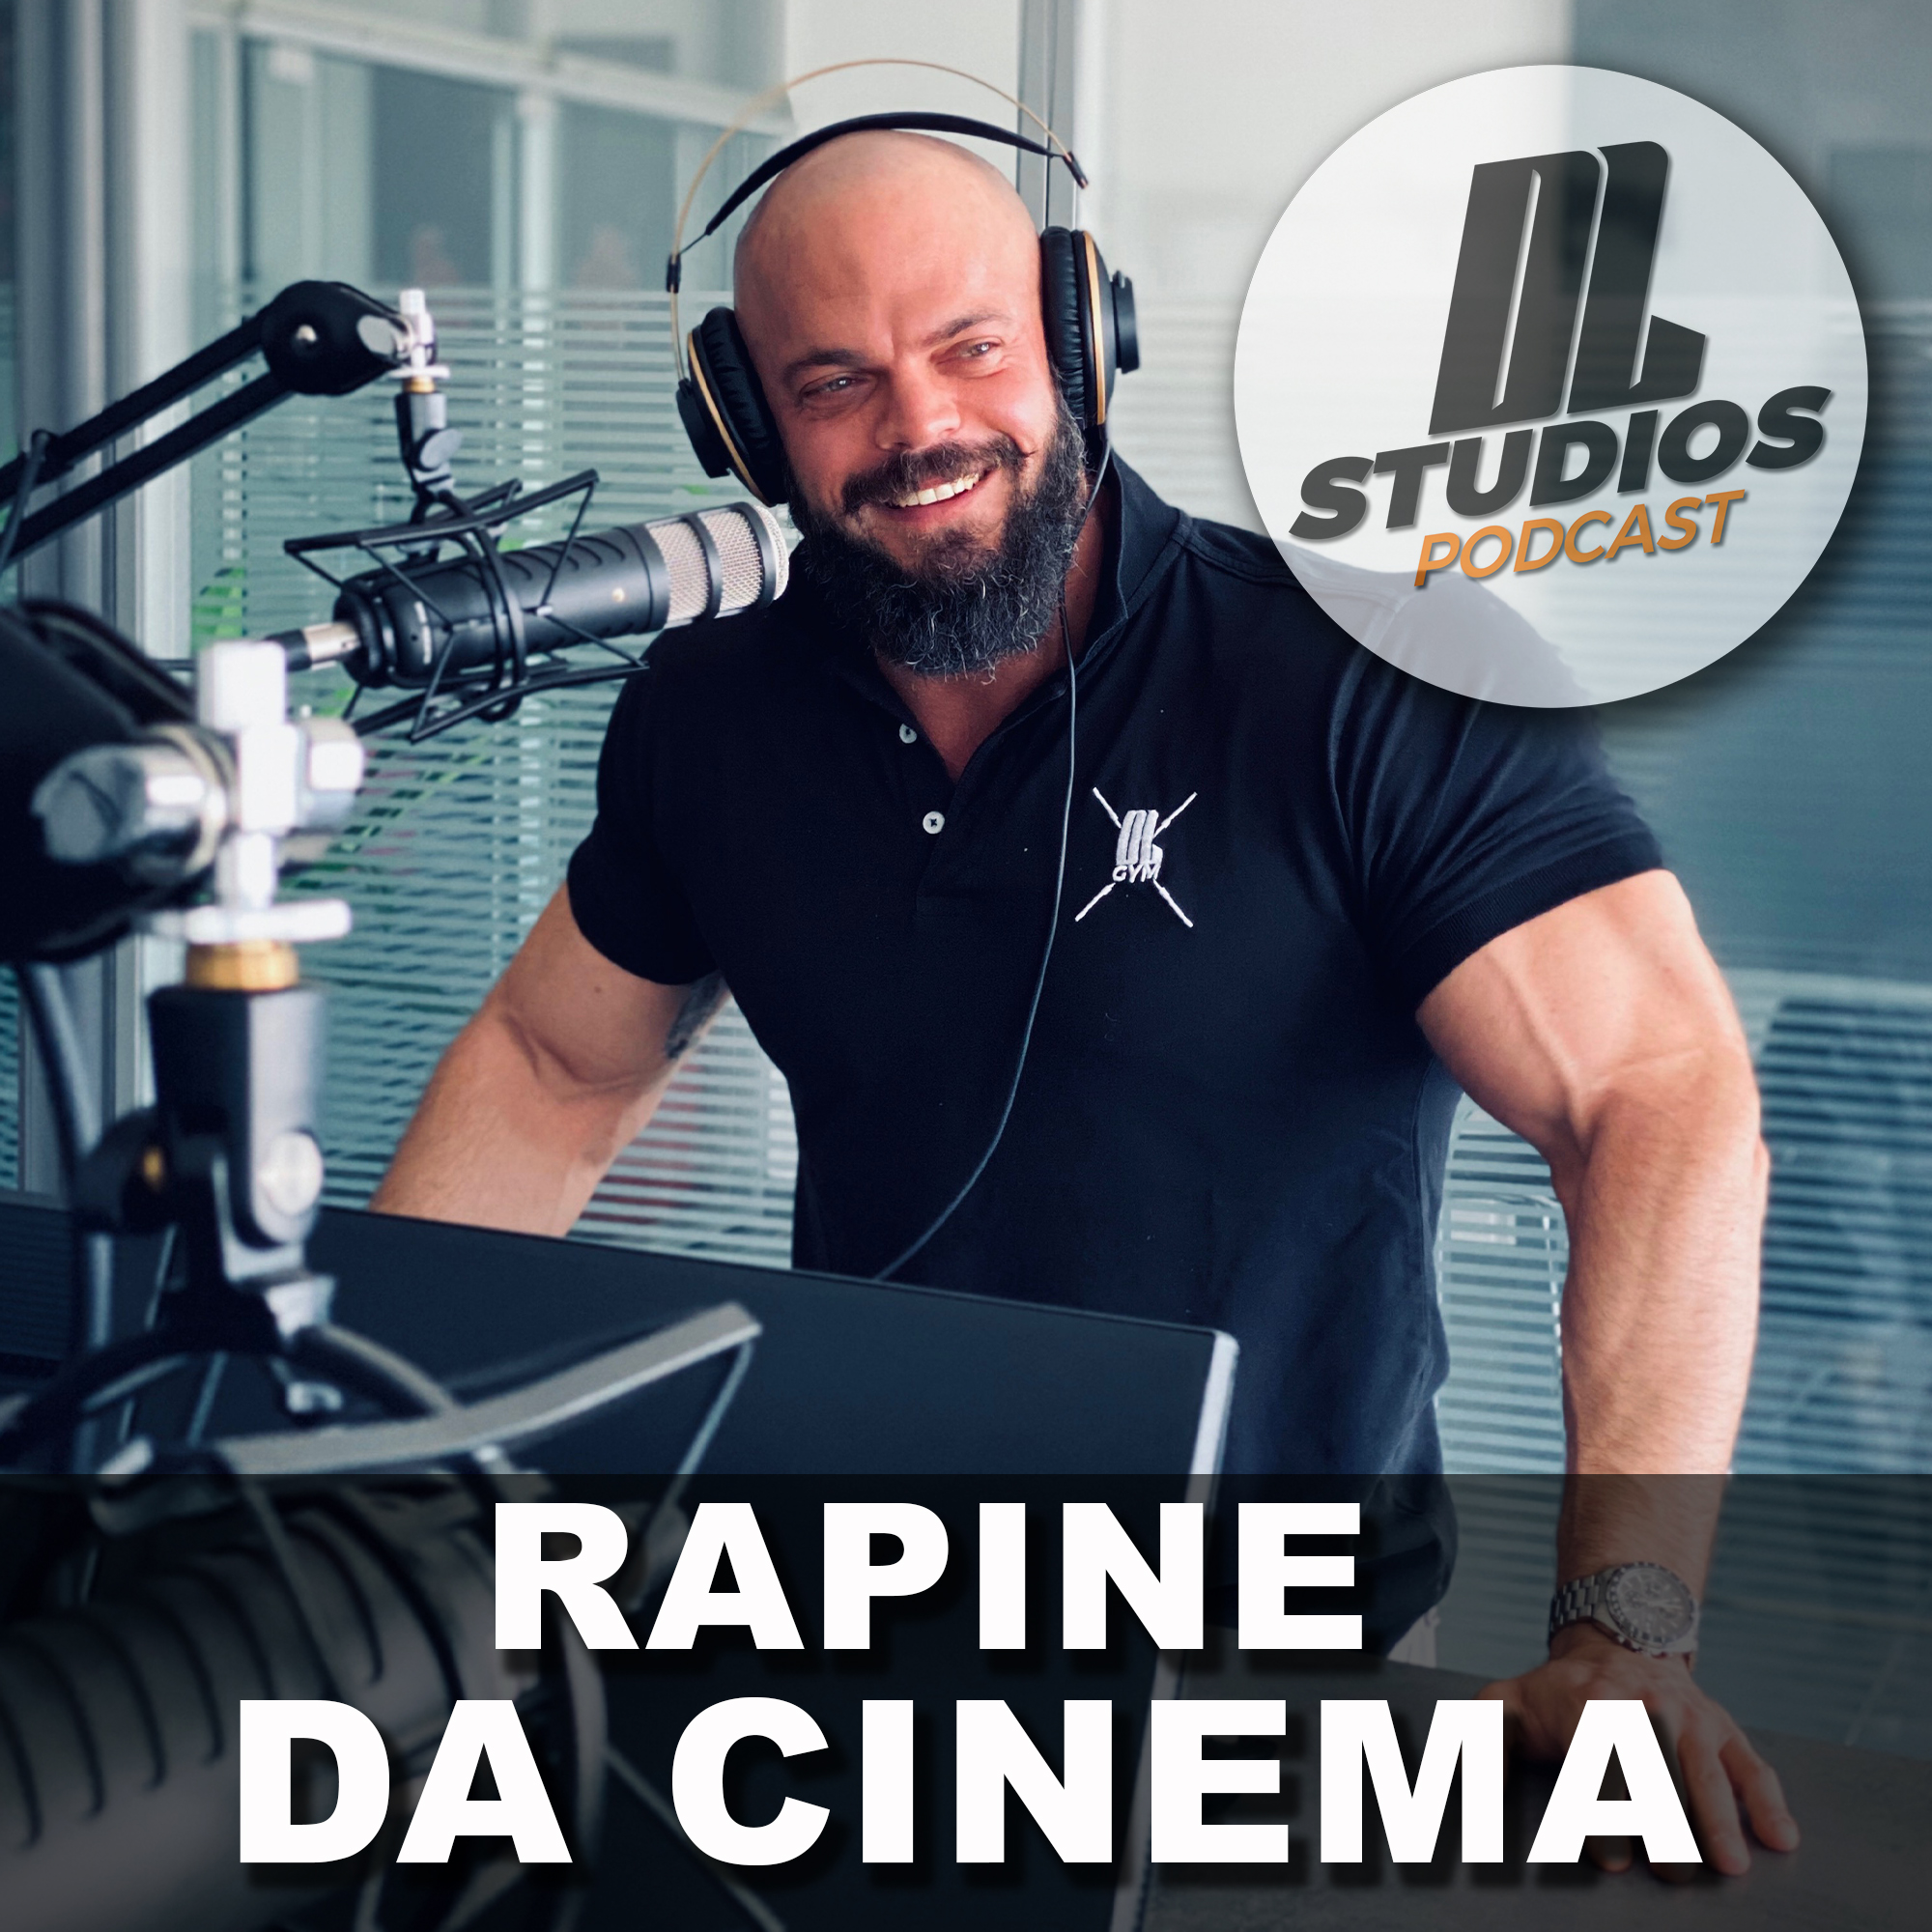 Rapine da cinema - The italian job